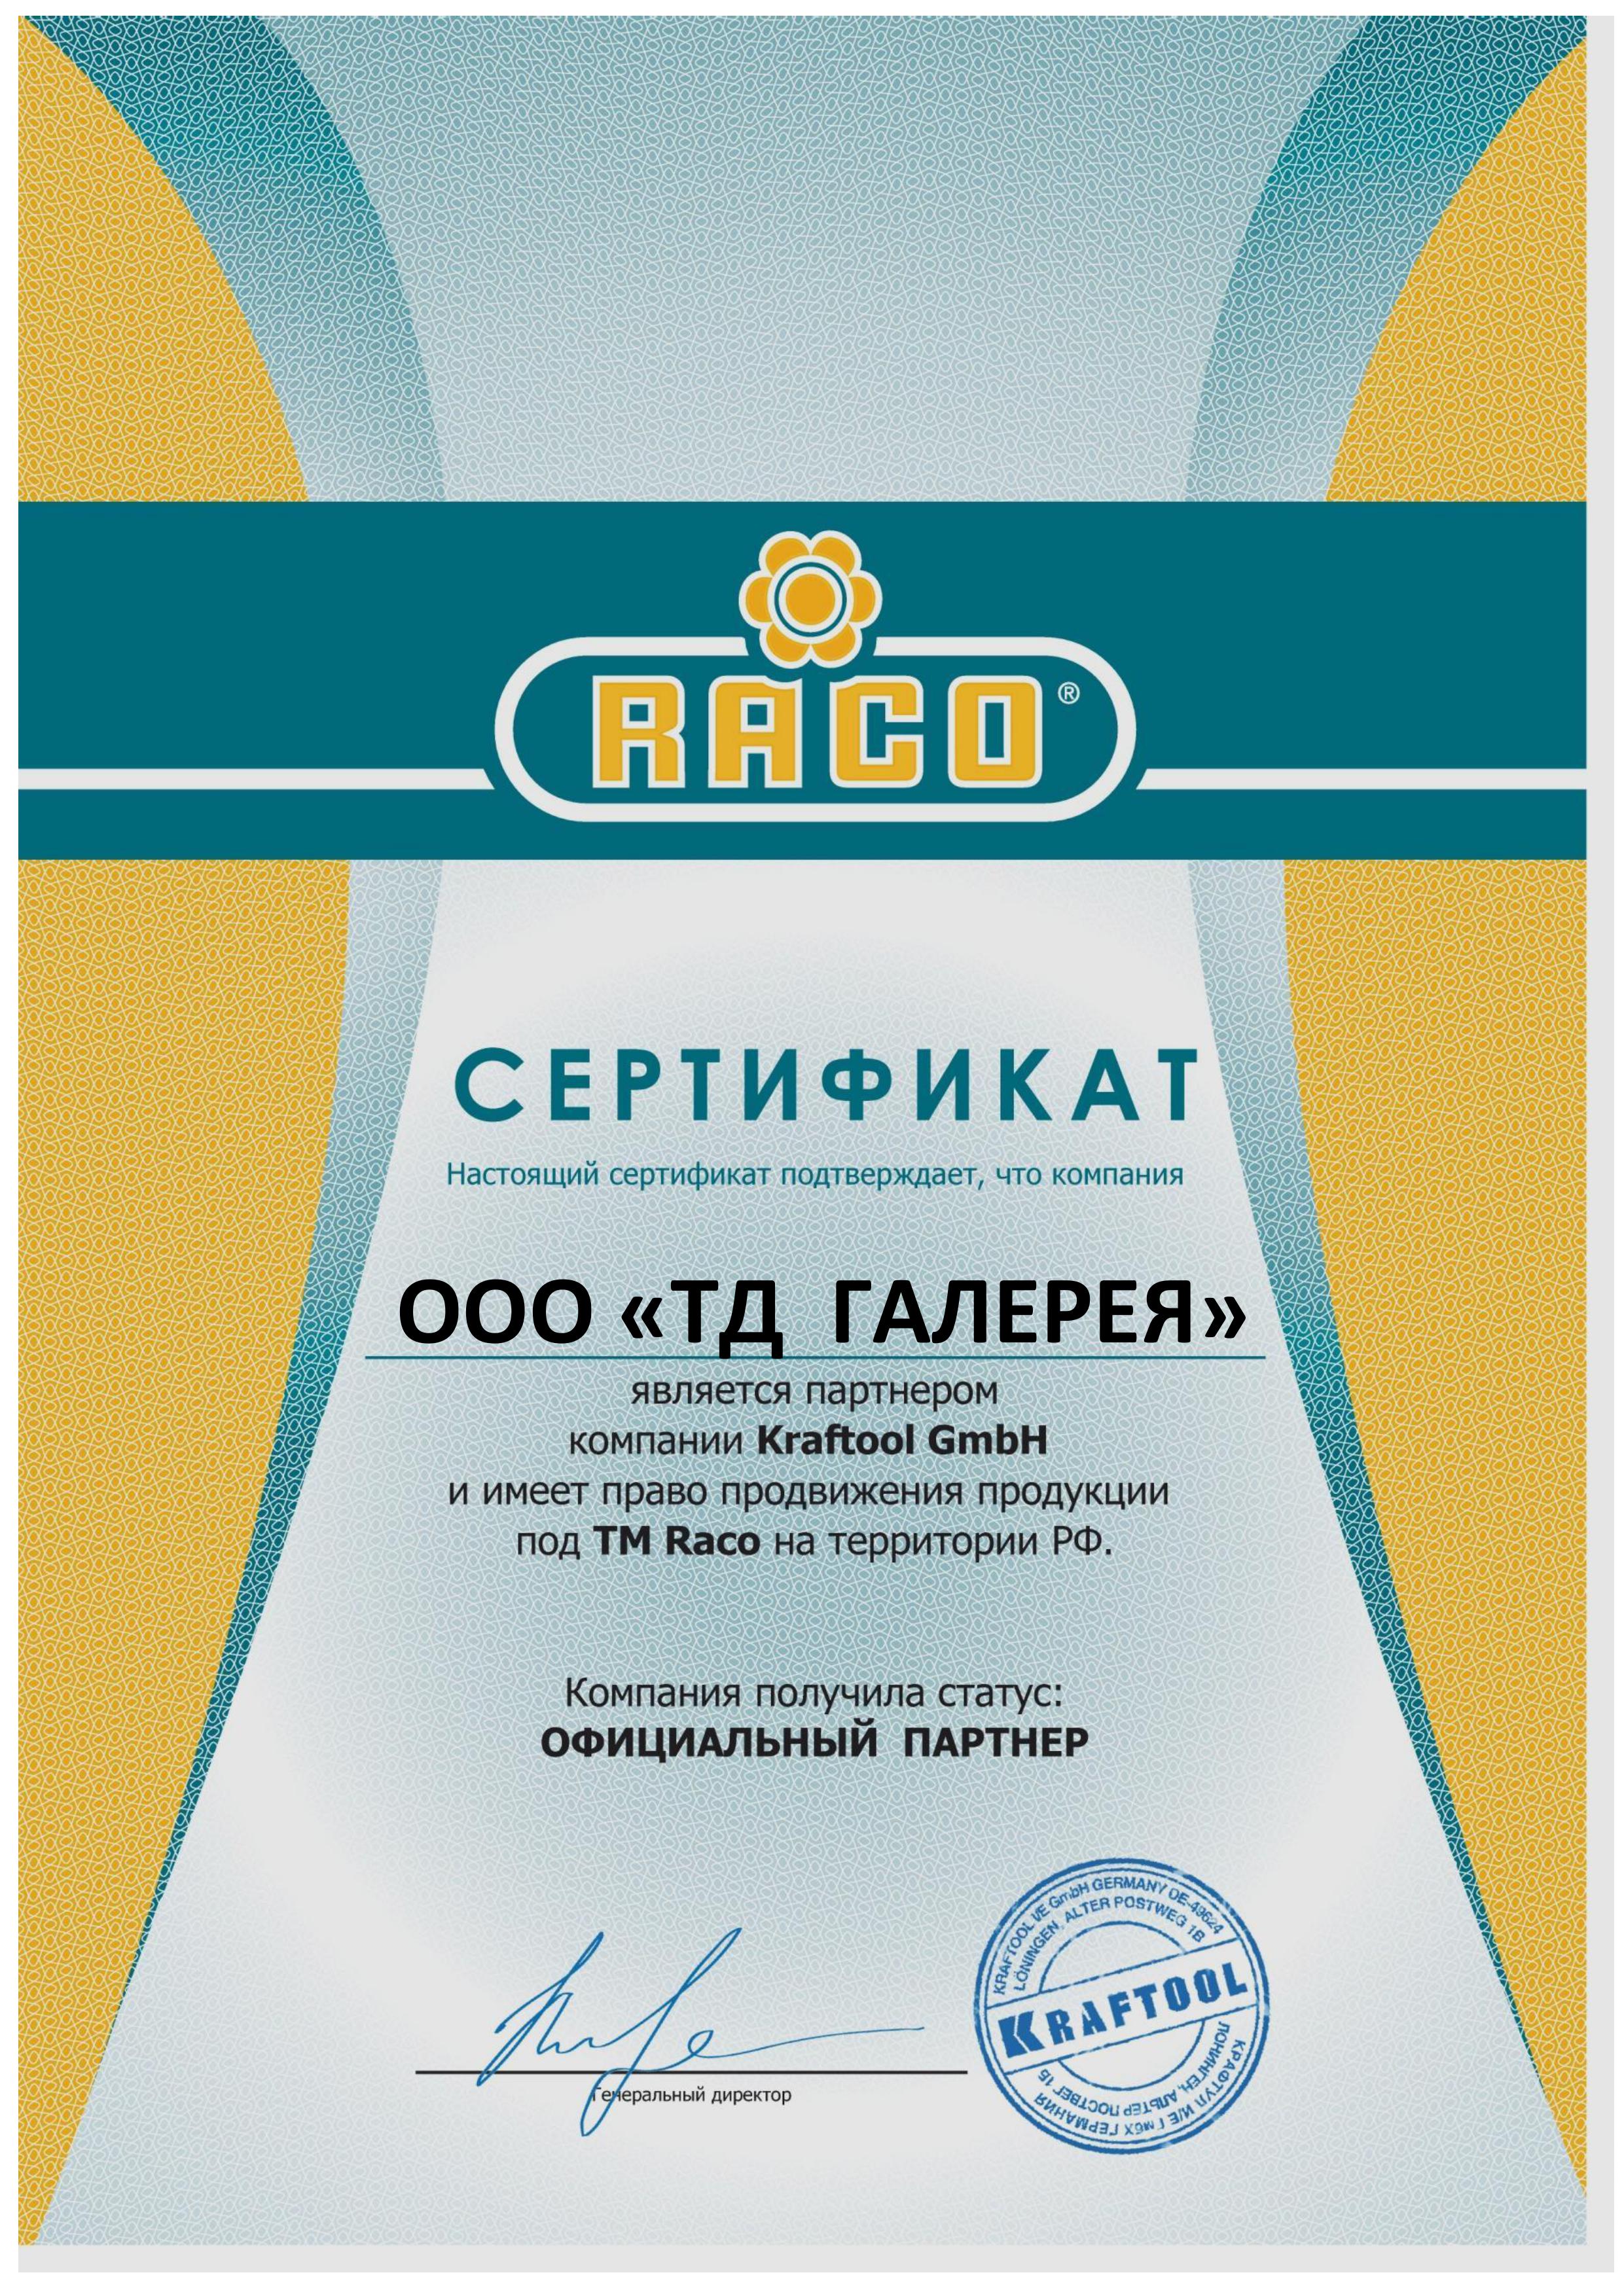 Сертификат RACO